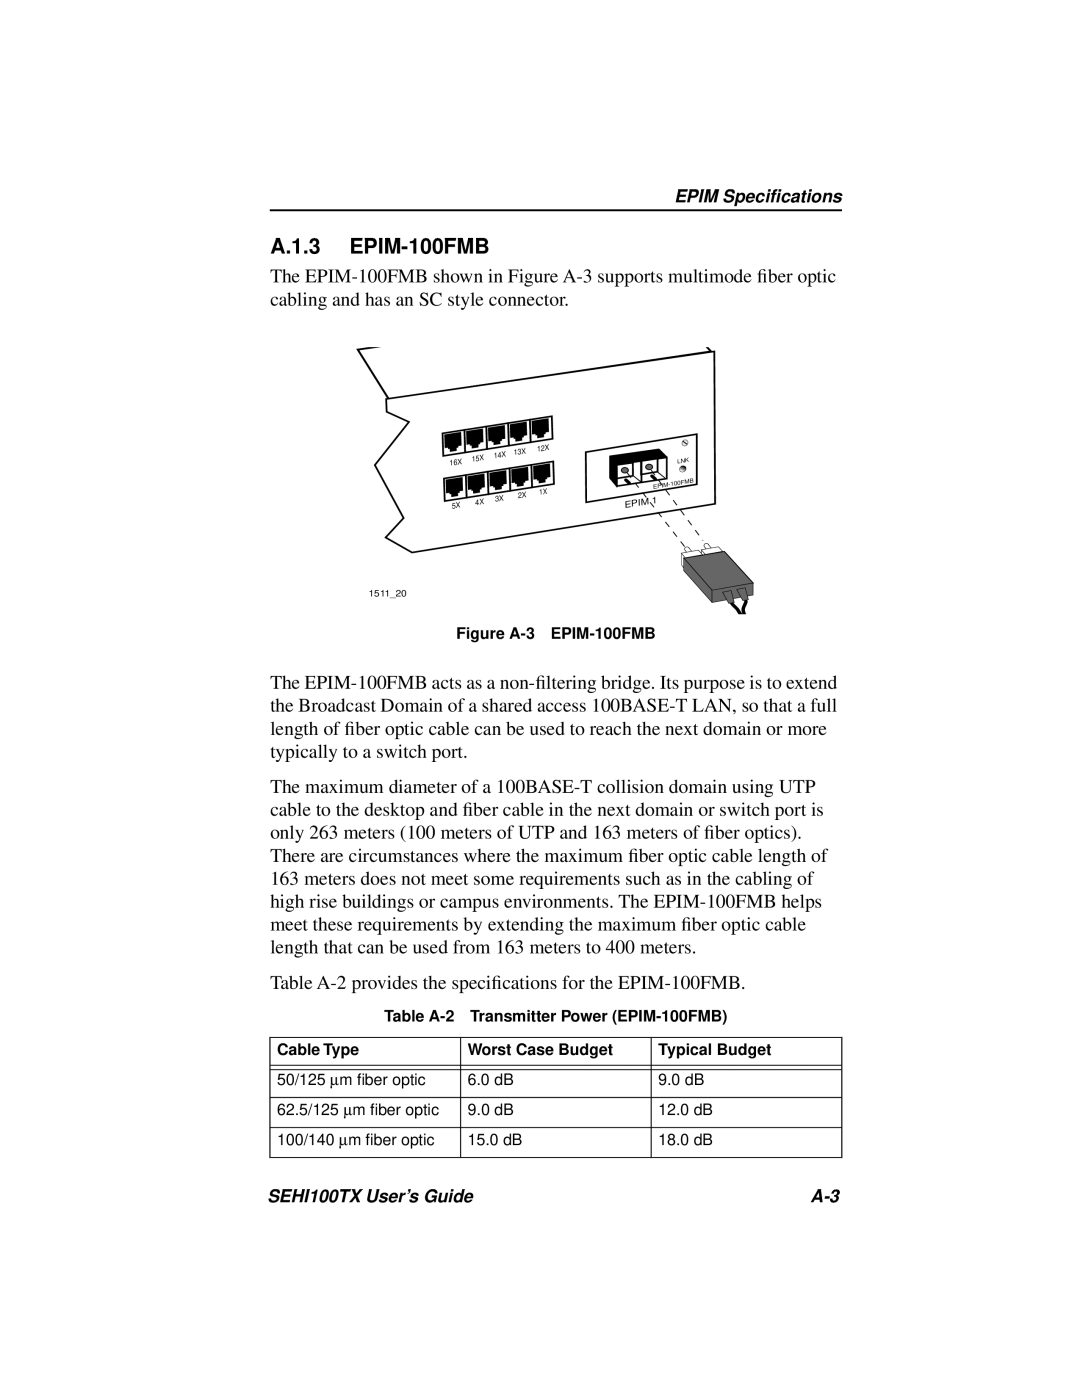 Cabletron Systems SEHI100TX-22 manual A.1.3 EPIM-100FMB 